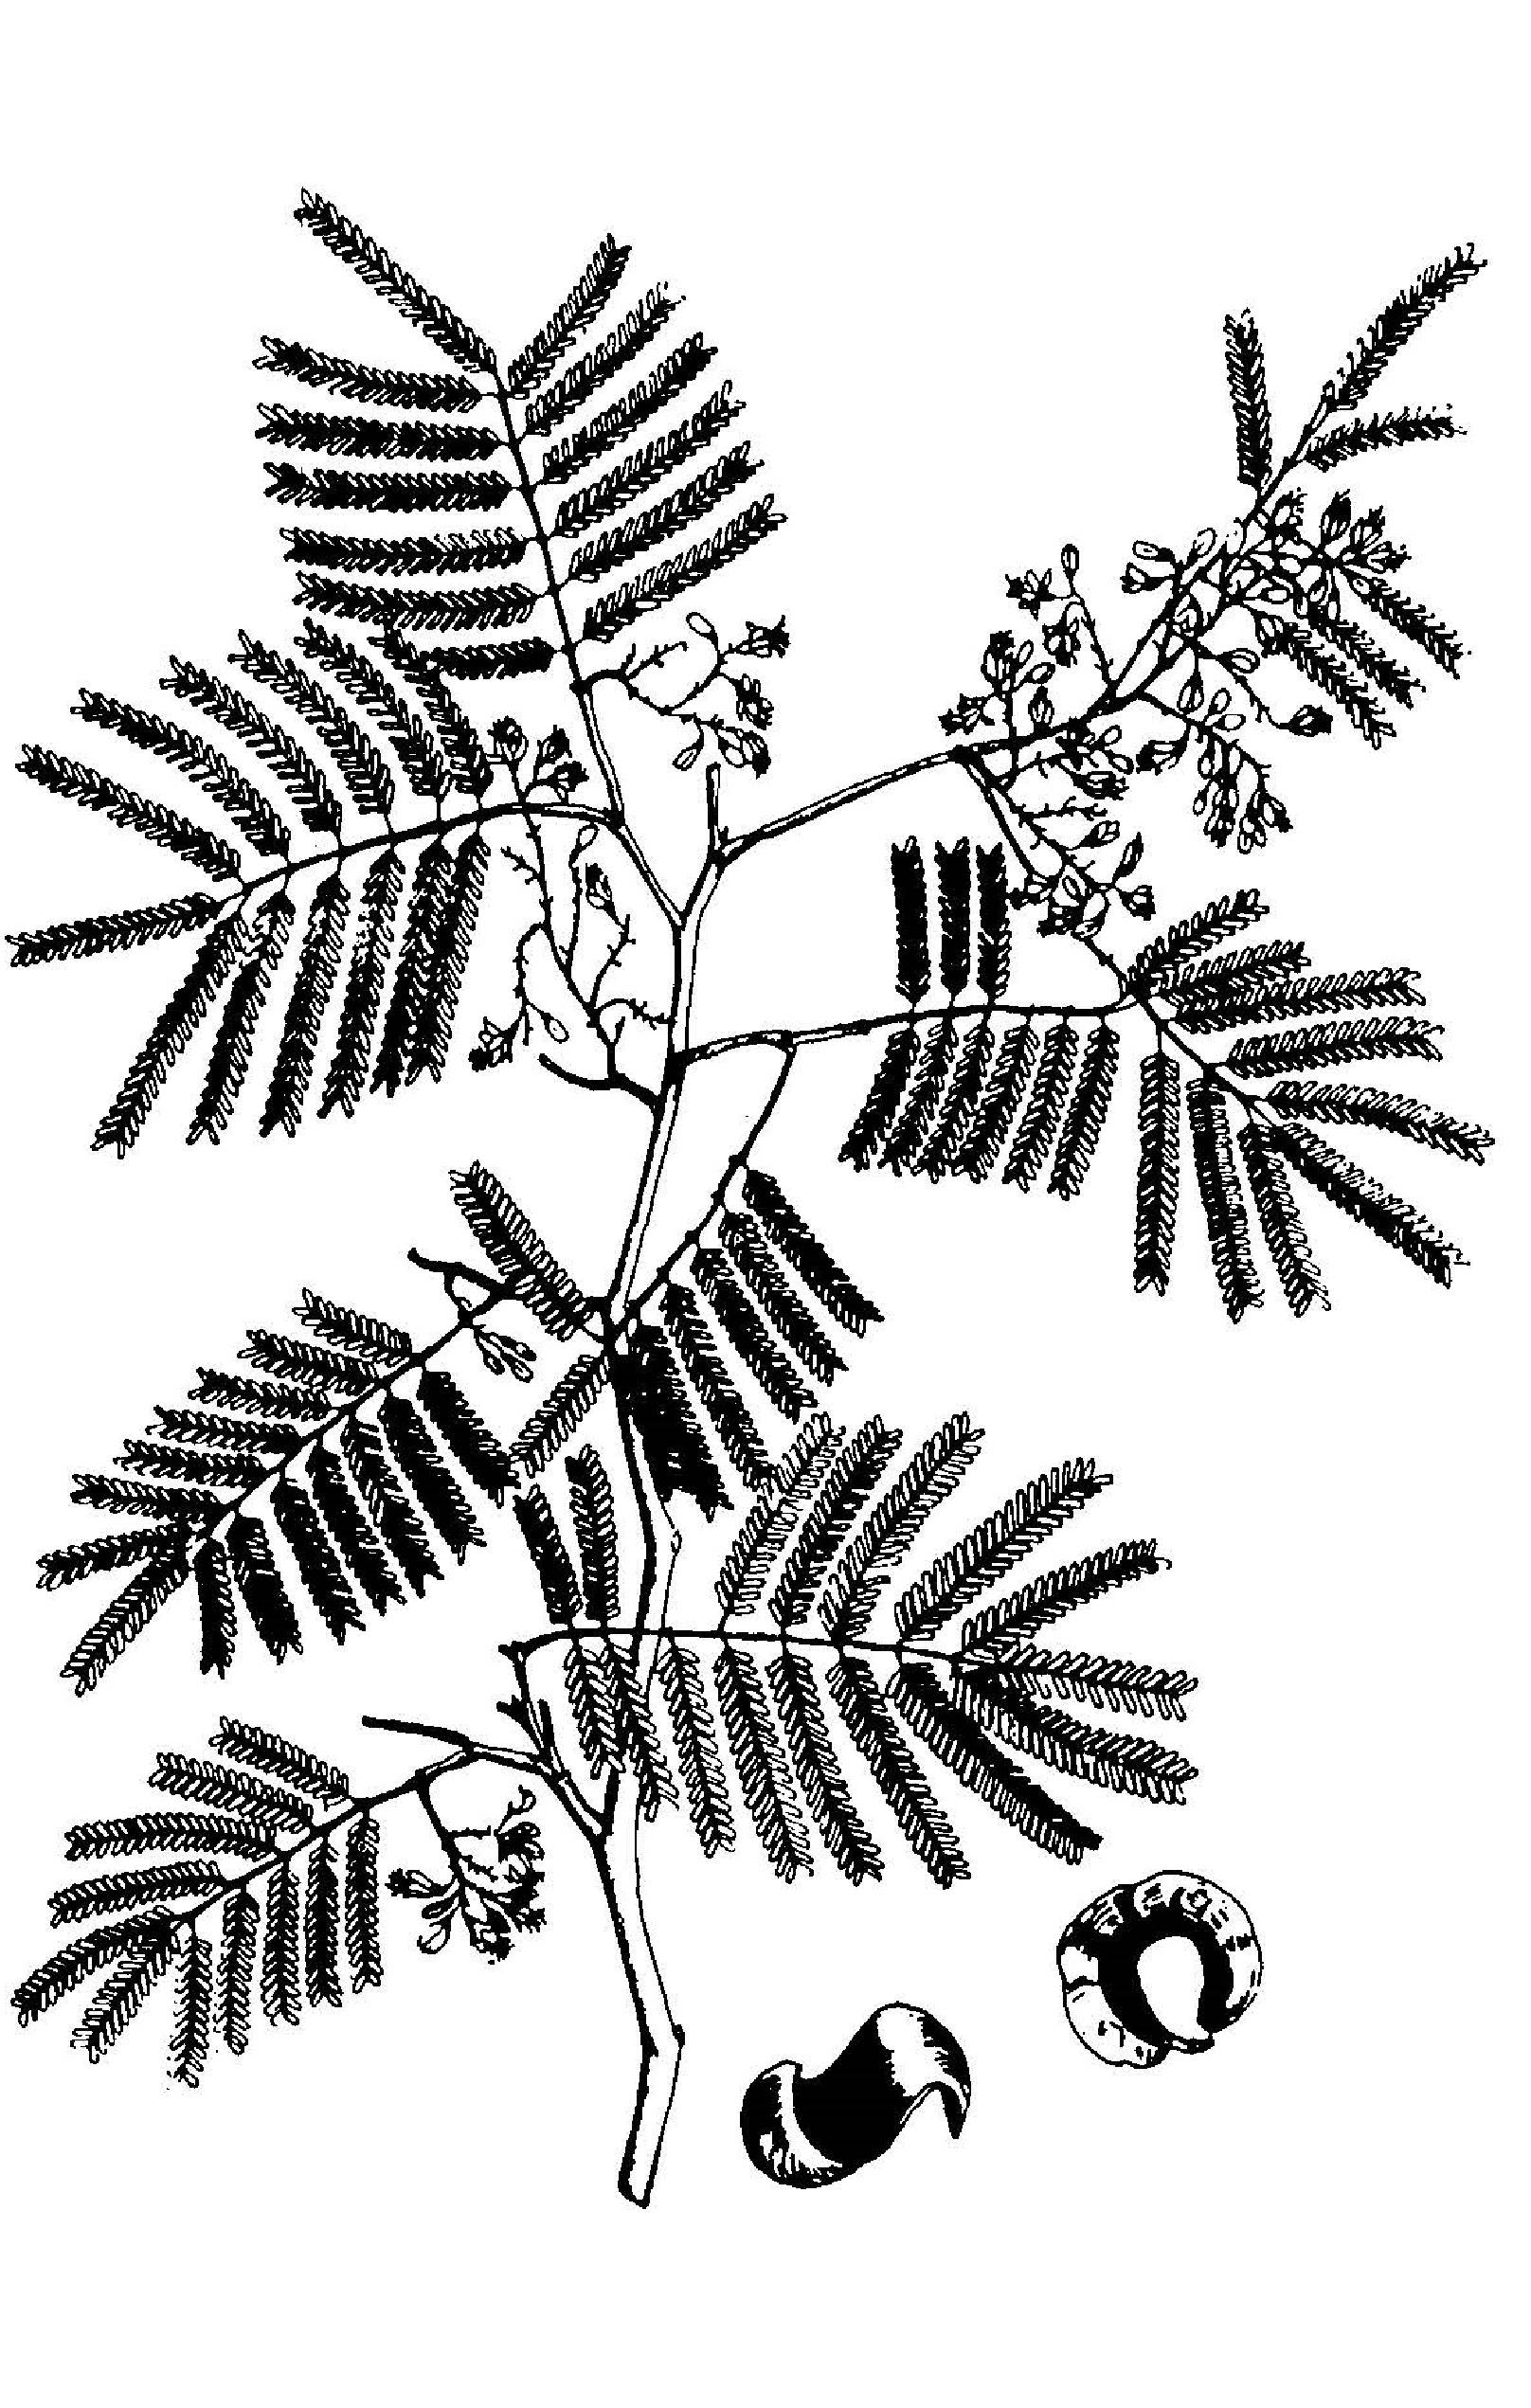 Libidibia coriaria image